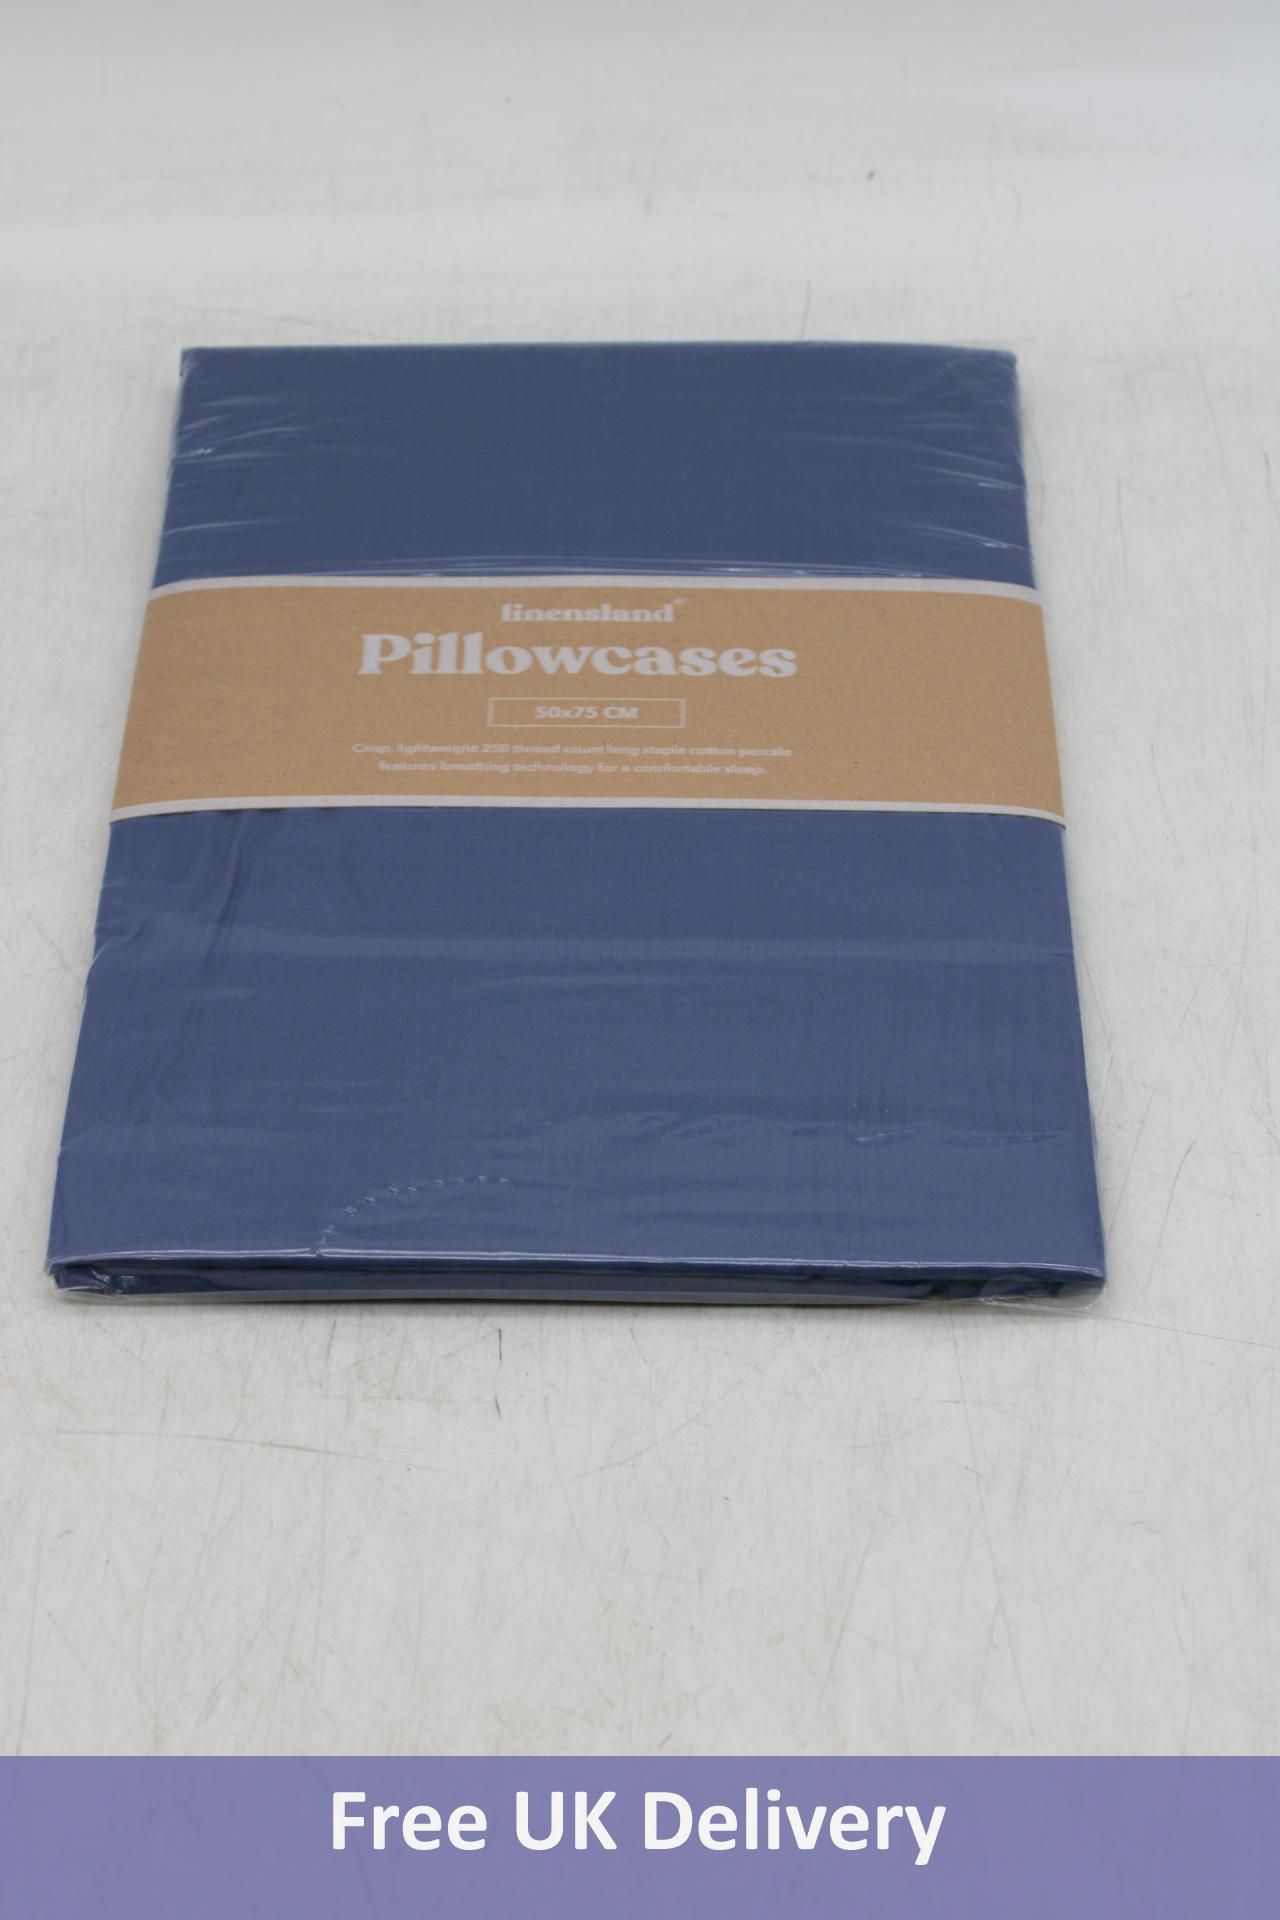 Twenty-five packs of Linensland Pillowcase, Navy, 50 x 75 cm, 4 per pack